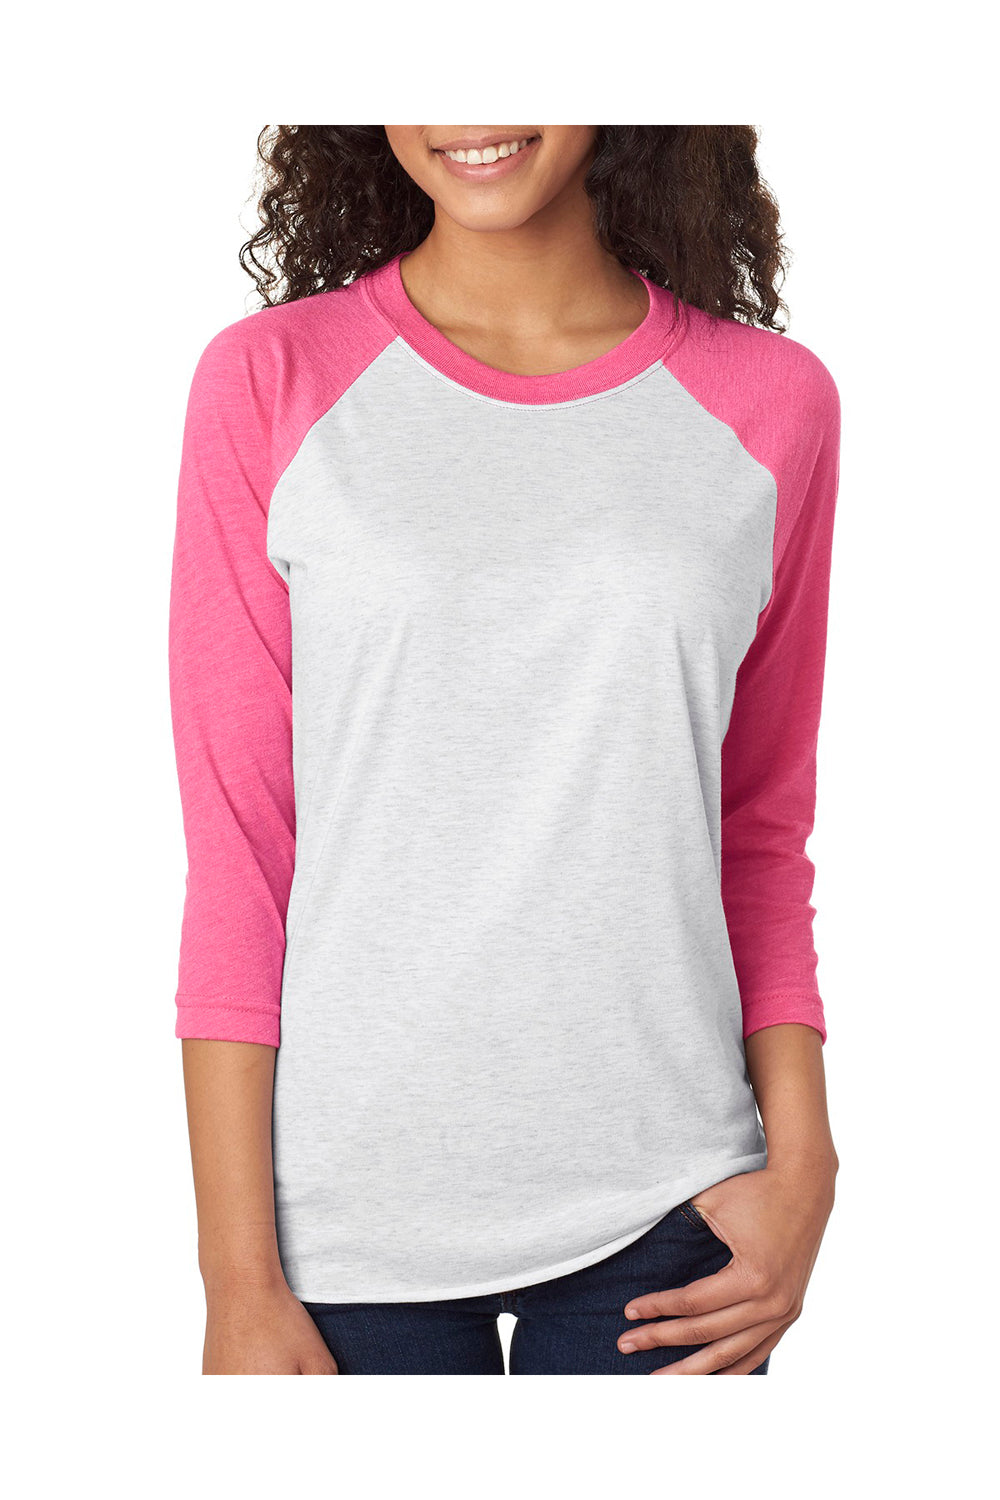 Next Level 6051 Mens Jersey 3/4 Sleeve Crewneck T-Shirt Heather White/Pink Front